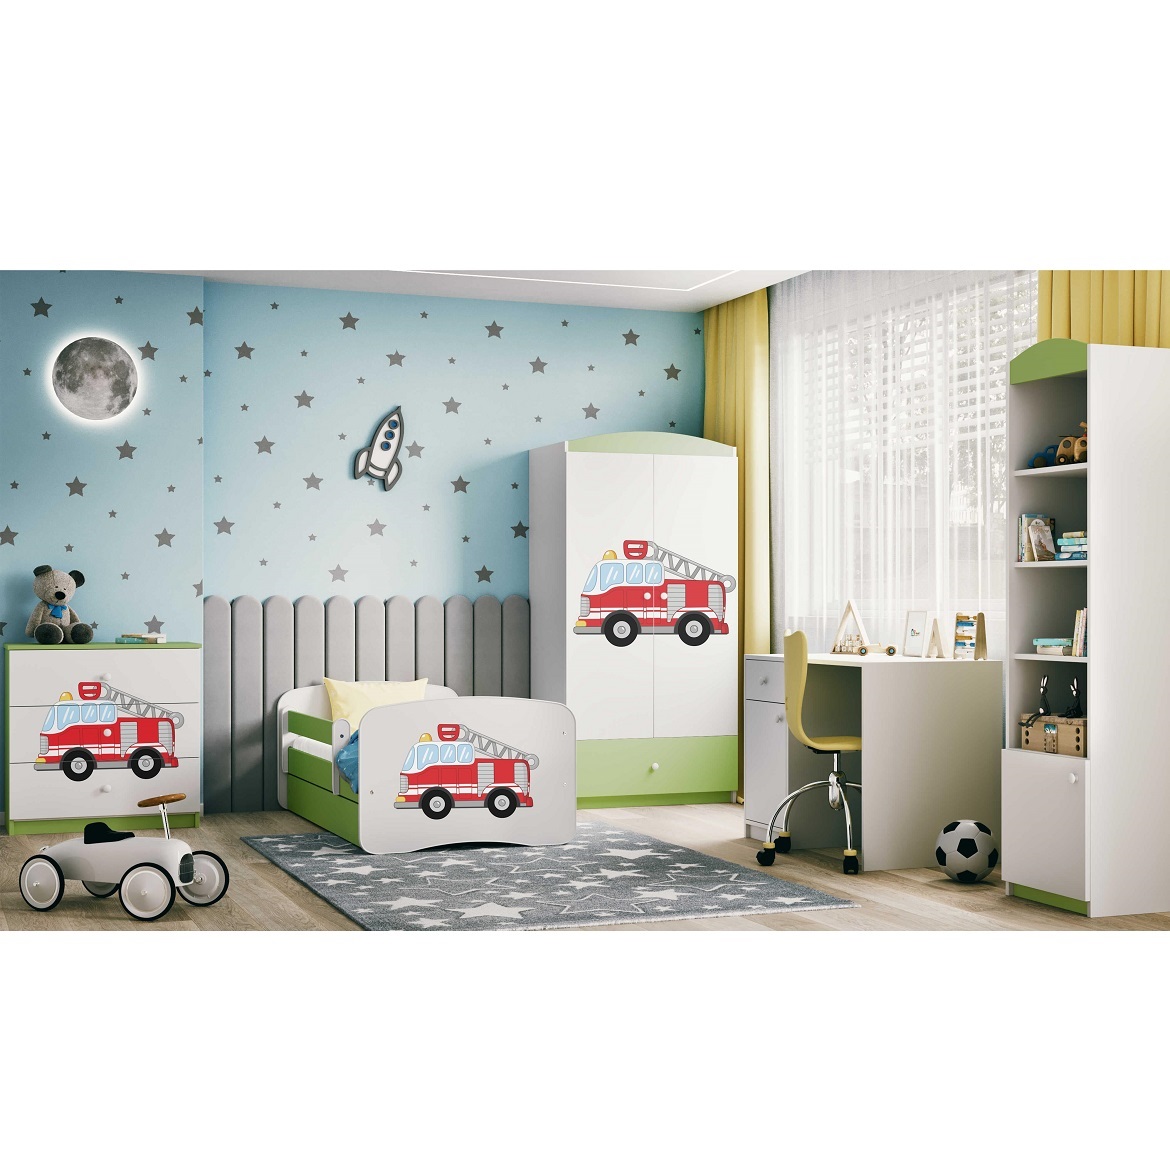 Kinderbett Babydreams+SZ grün 70x140 Feuerwehrauto,6